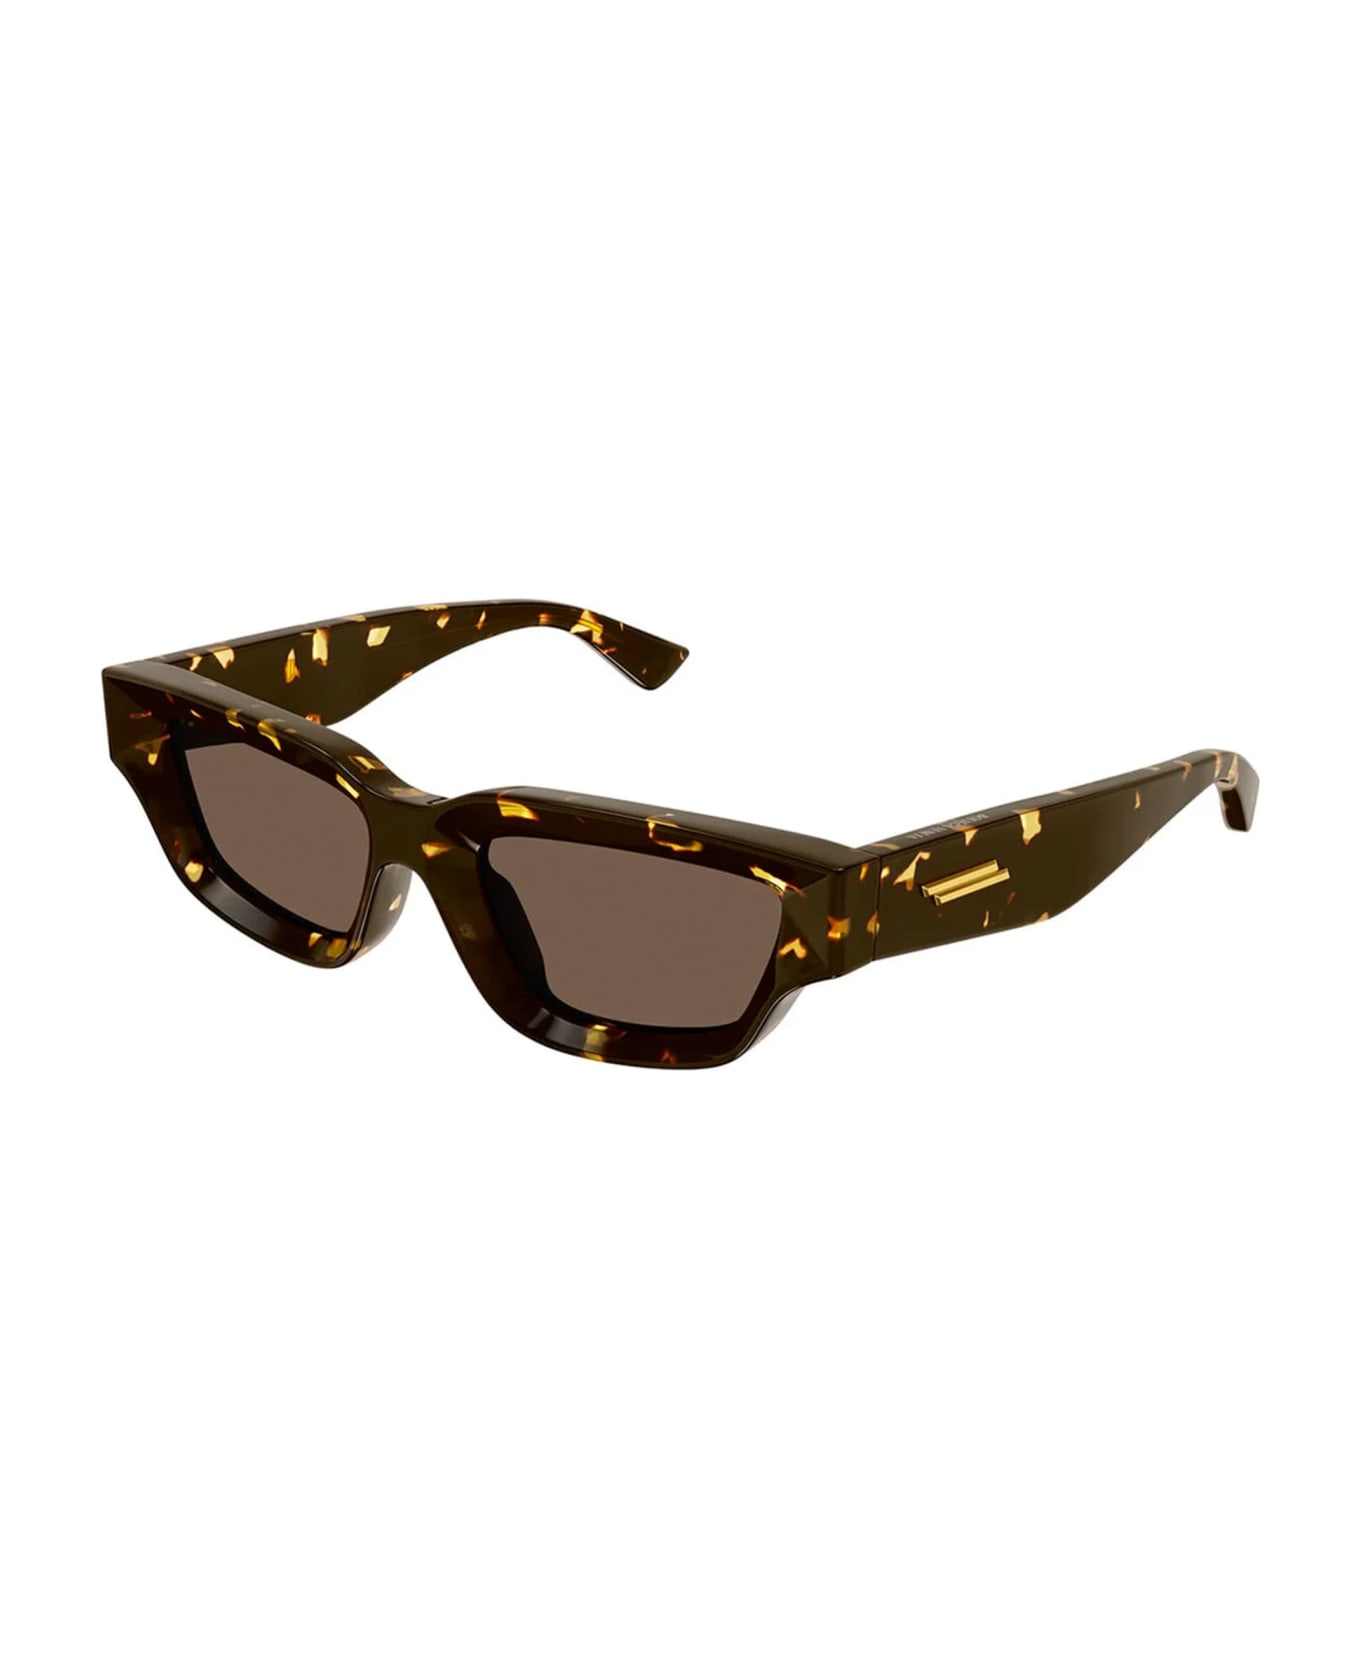 Bottega Veneta Eyewear Bv1250s-002 - Tortoise Sunglasses - Tortoise